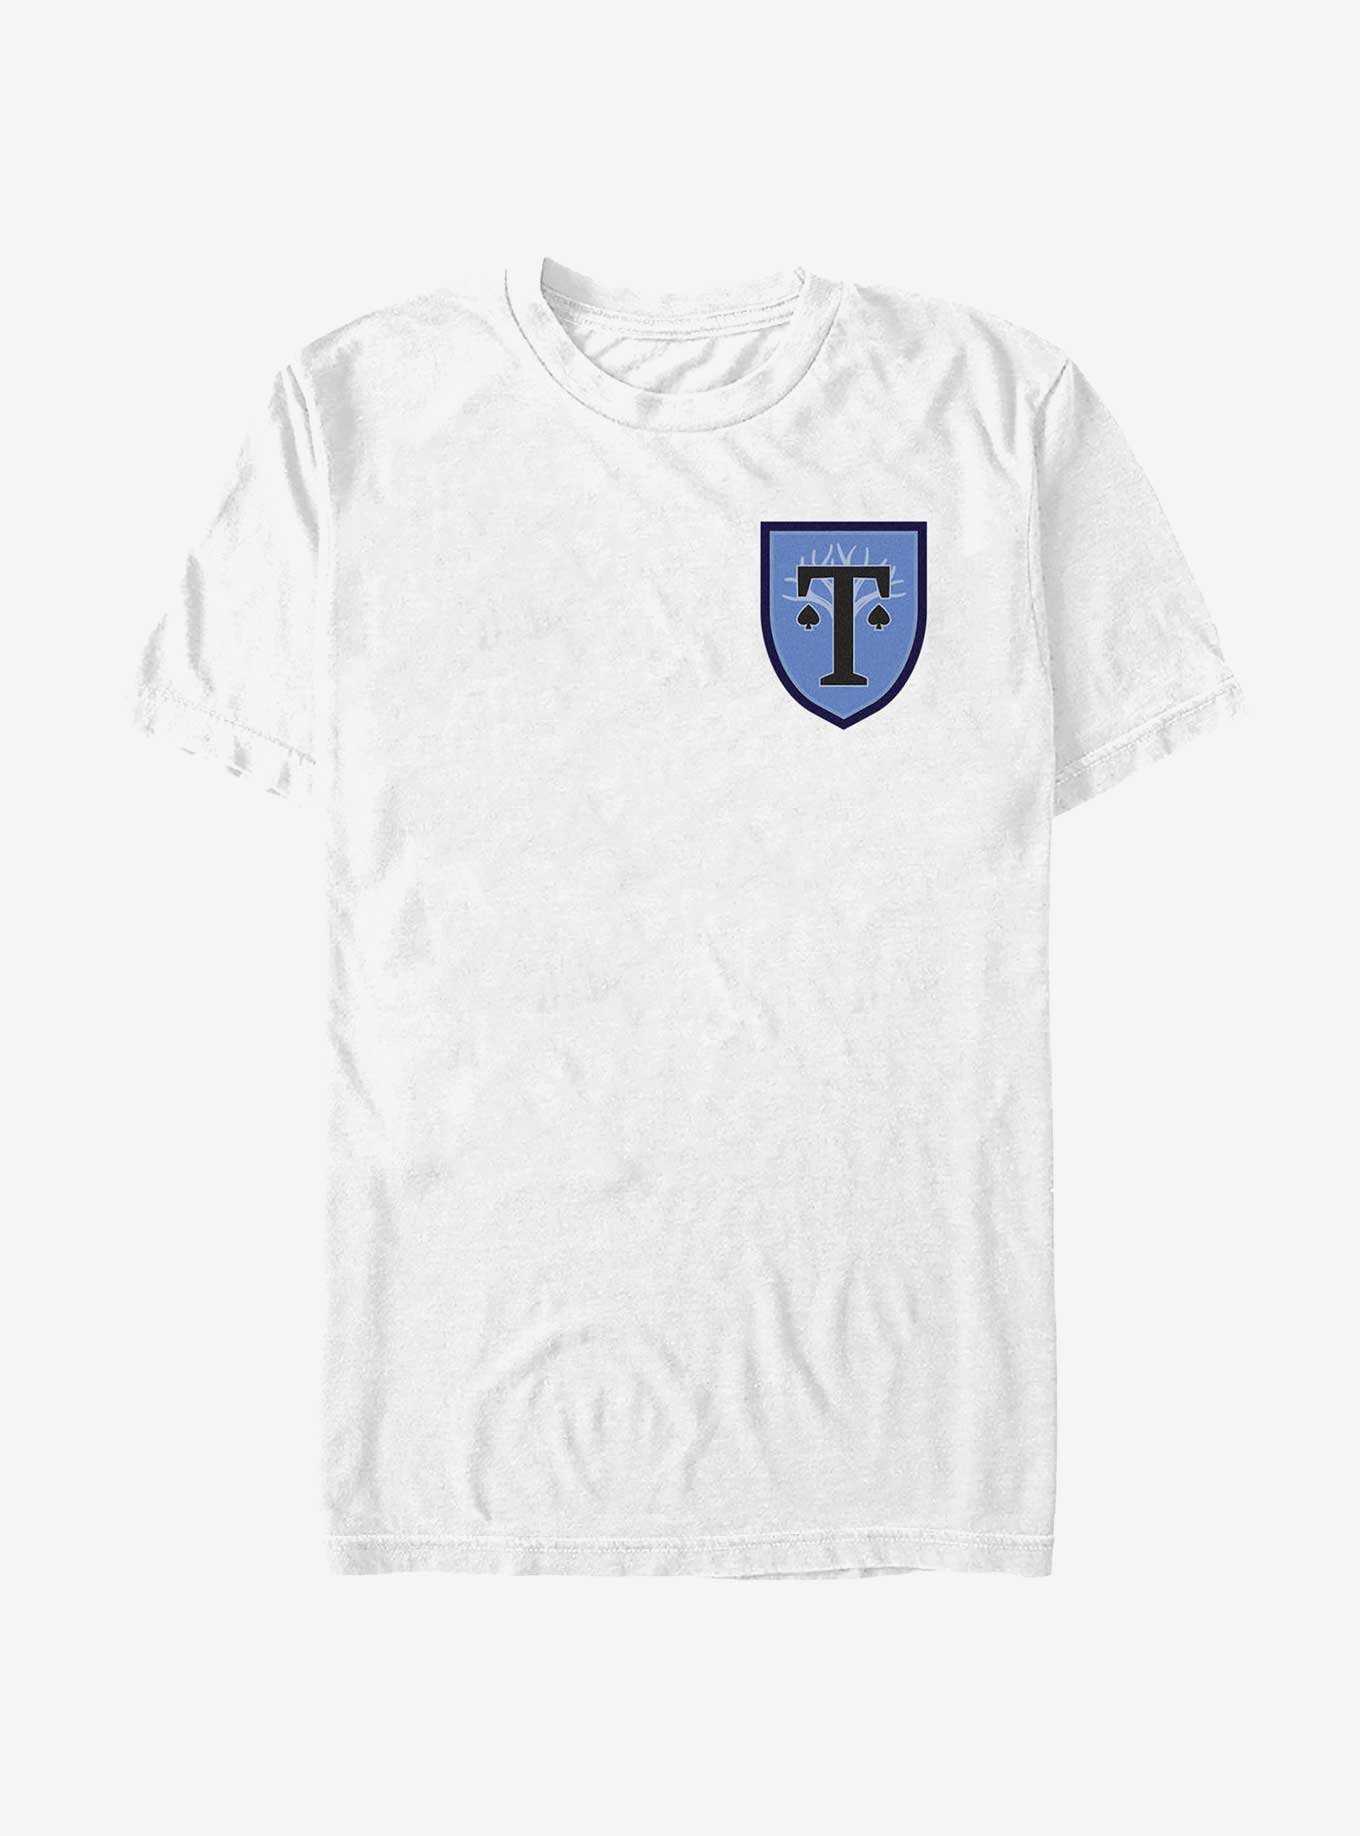 Heartstopper Truham School Pocket Crest T-Shirt, , hi-res